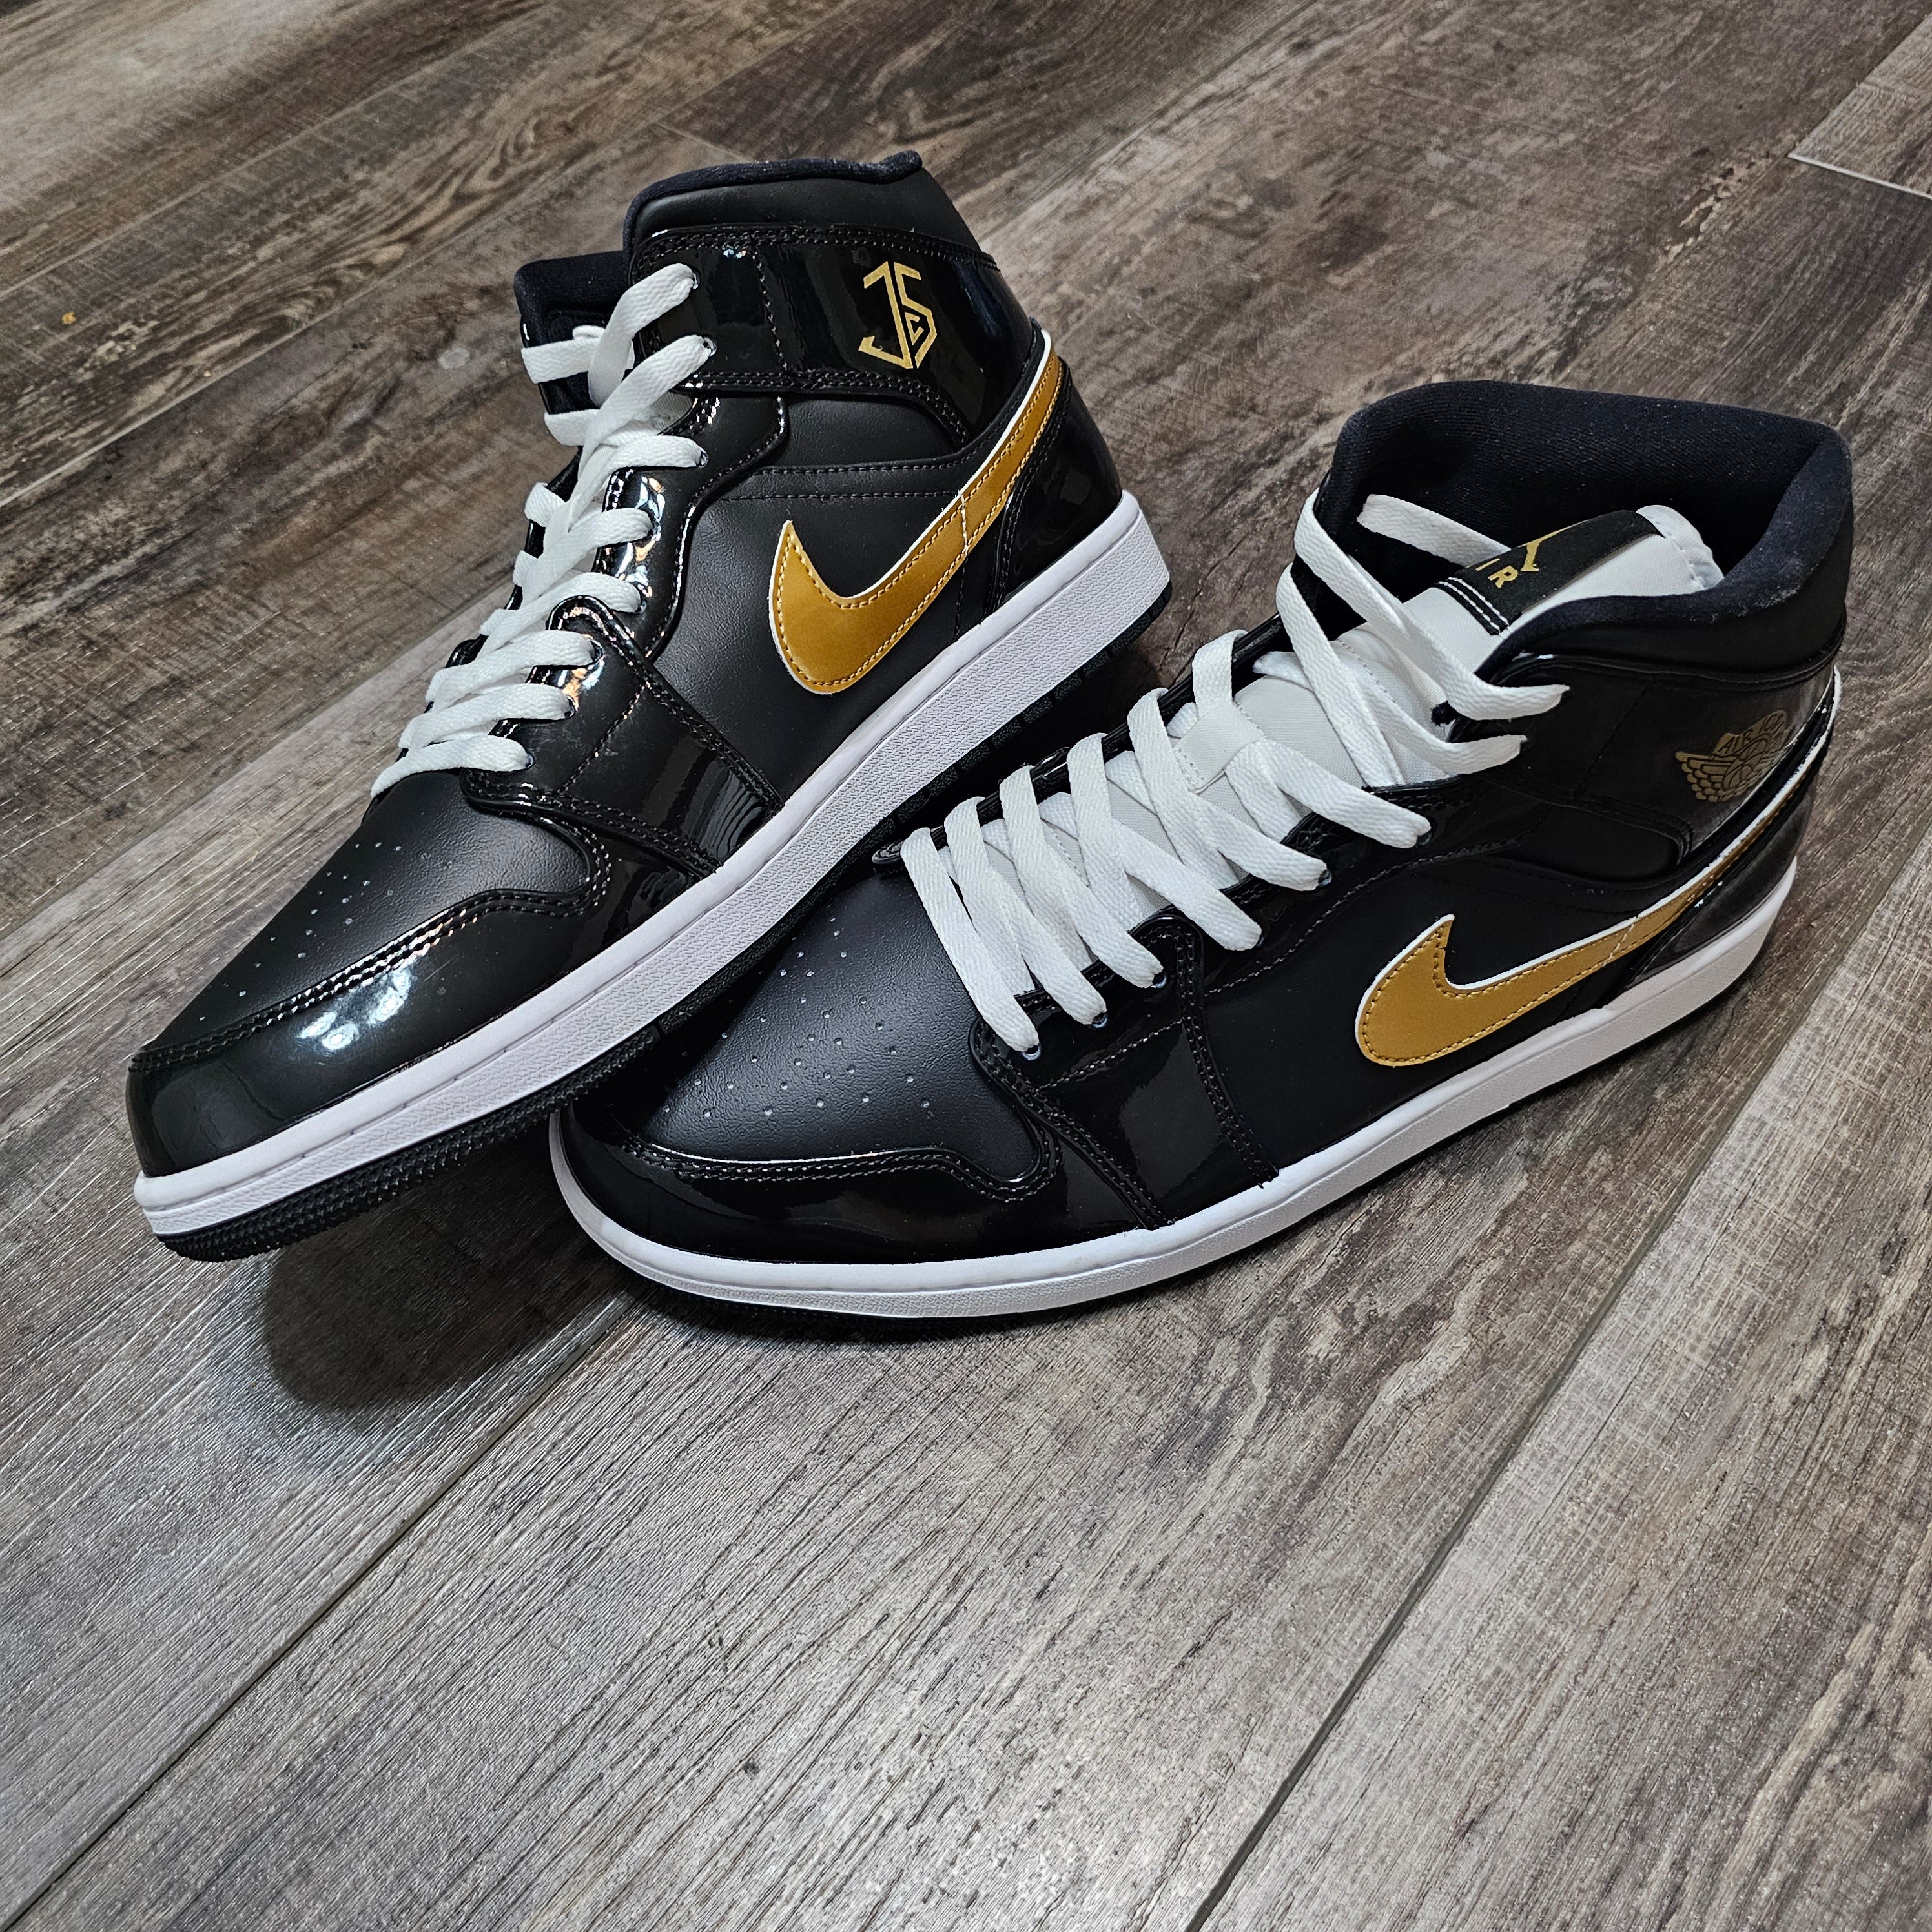 Two tone Black and Gold Jordan 1 SE - Custom Colorway